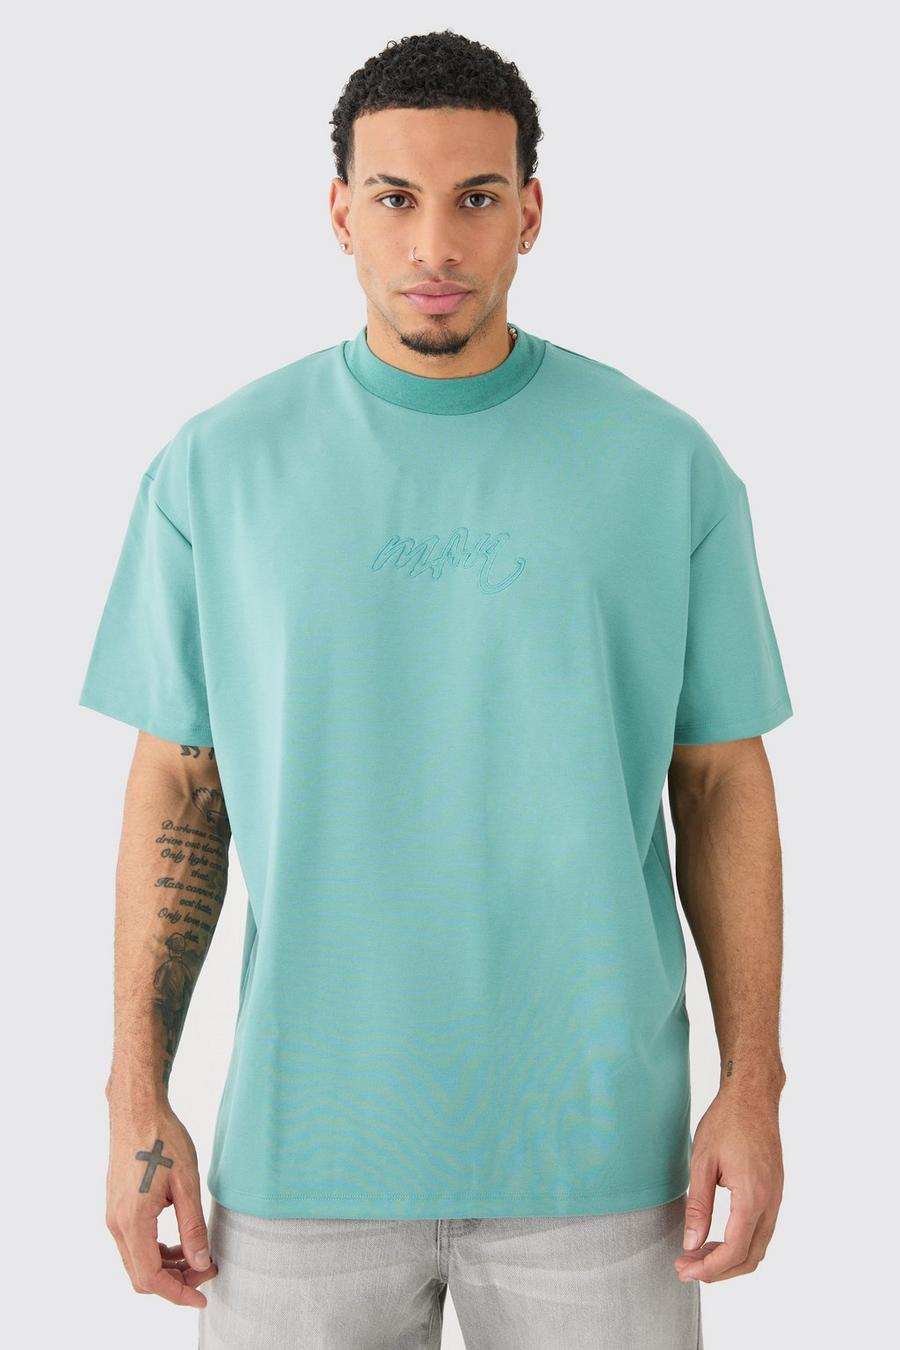 Teal Oversized Super Dik Geborduurd Premium T-Shirt